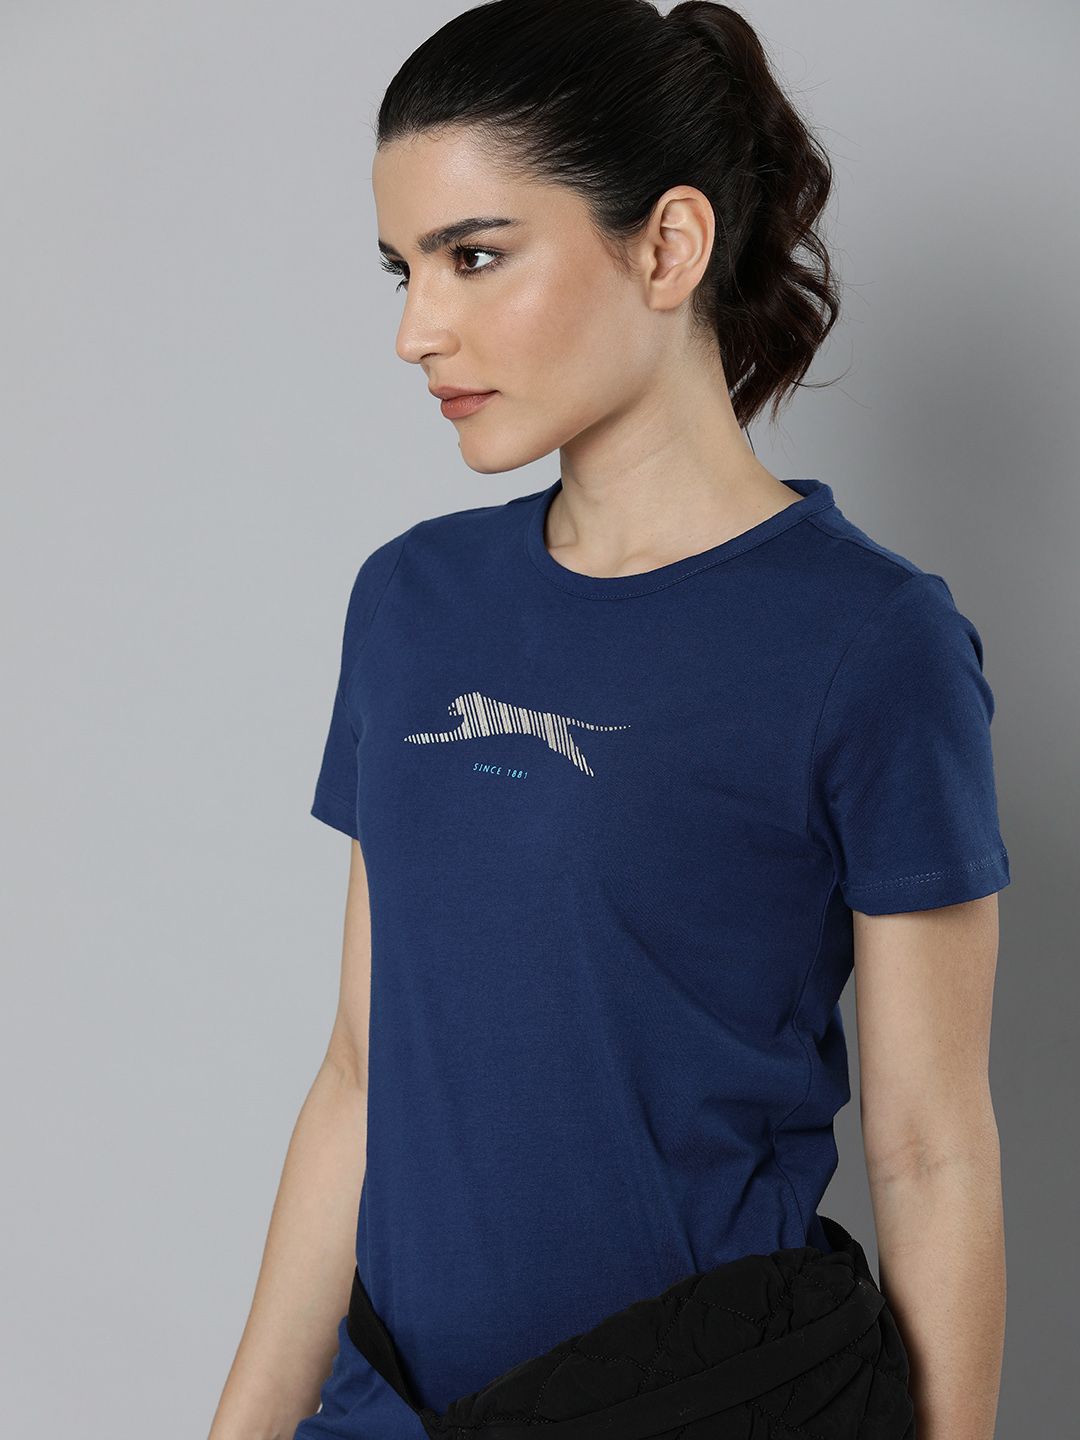 Slazenger Women Navy Blue Brand Logo Printed Pure Cotton Athleisure T-shirt Price in India